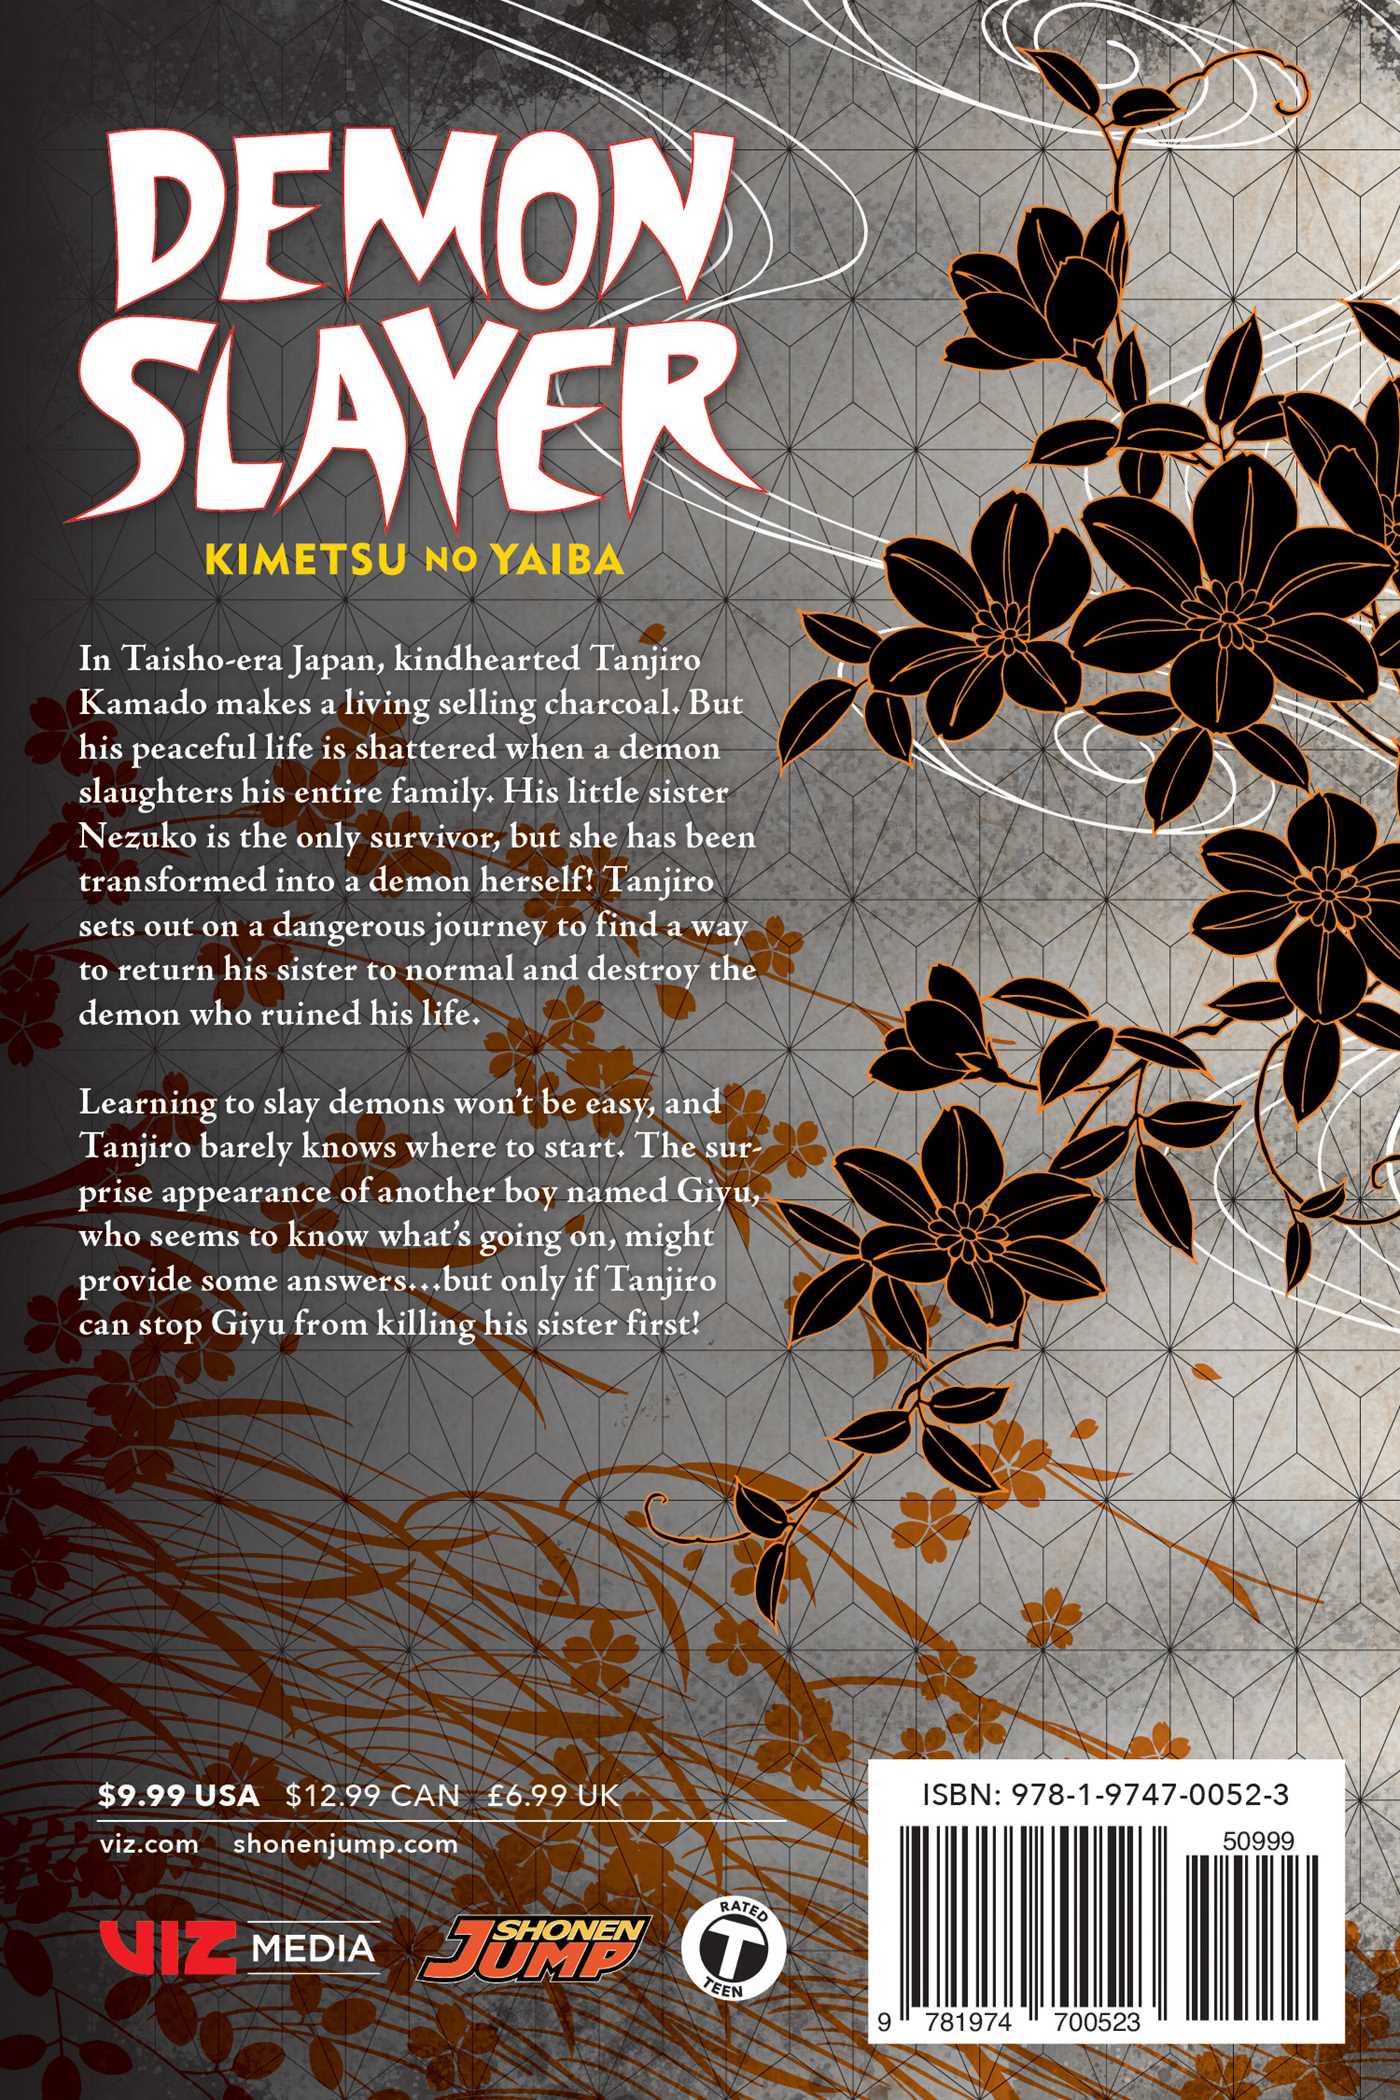 Demon Slayer: Kimetsu no Yaiba Vol. 1 Review - Hey Poor Player